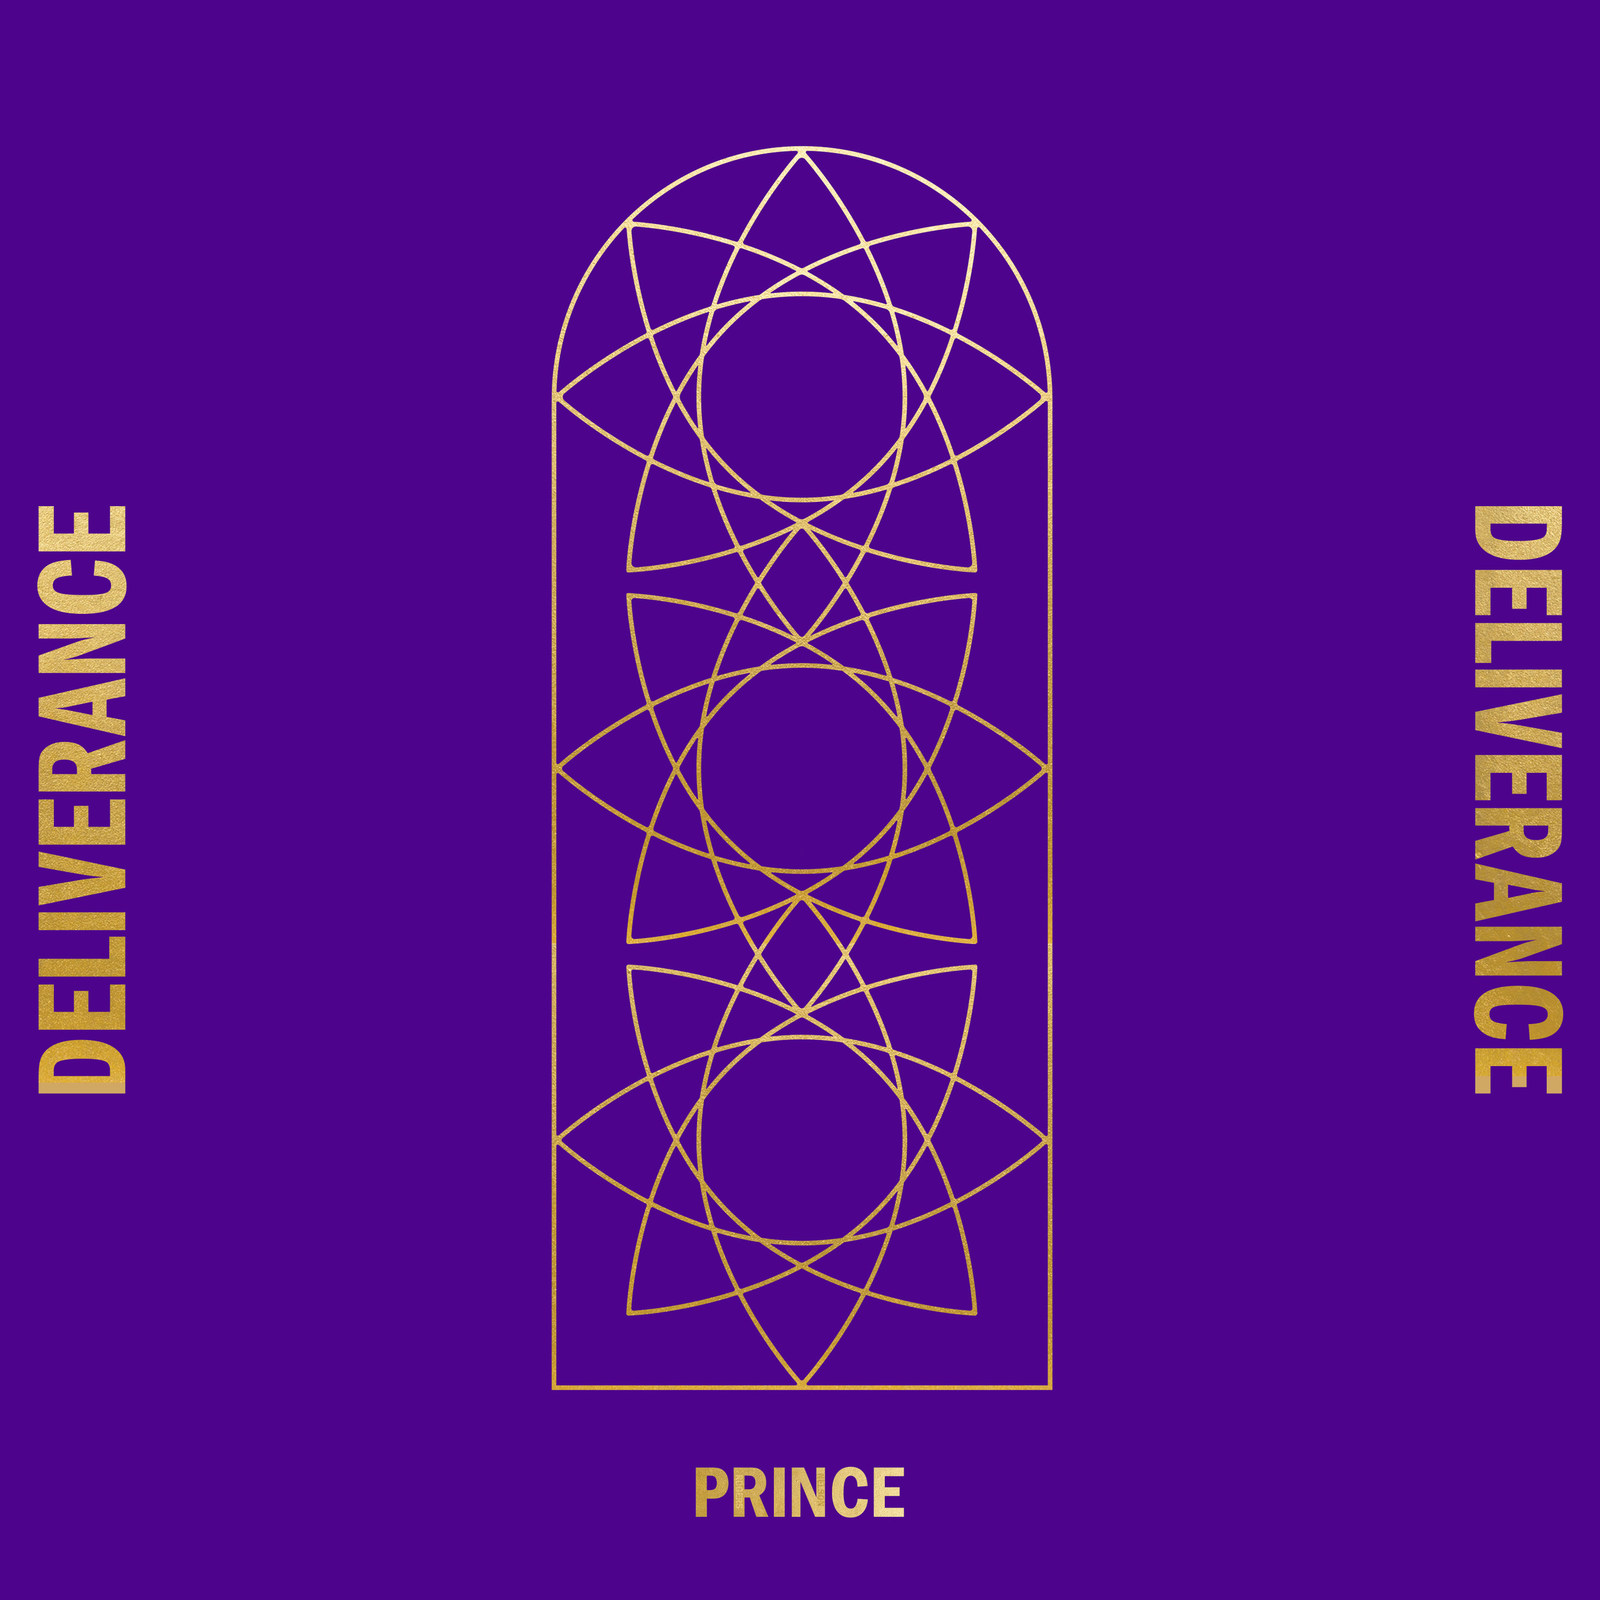 Prince, deliverance album